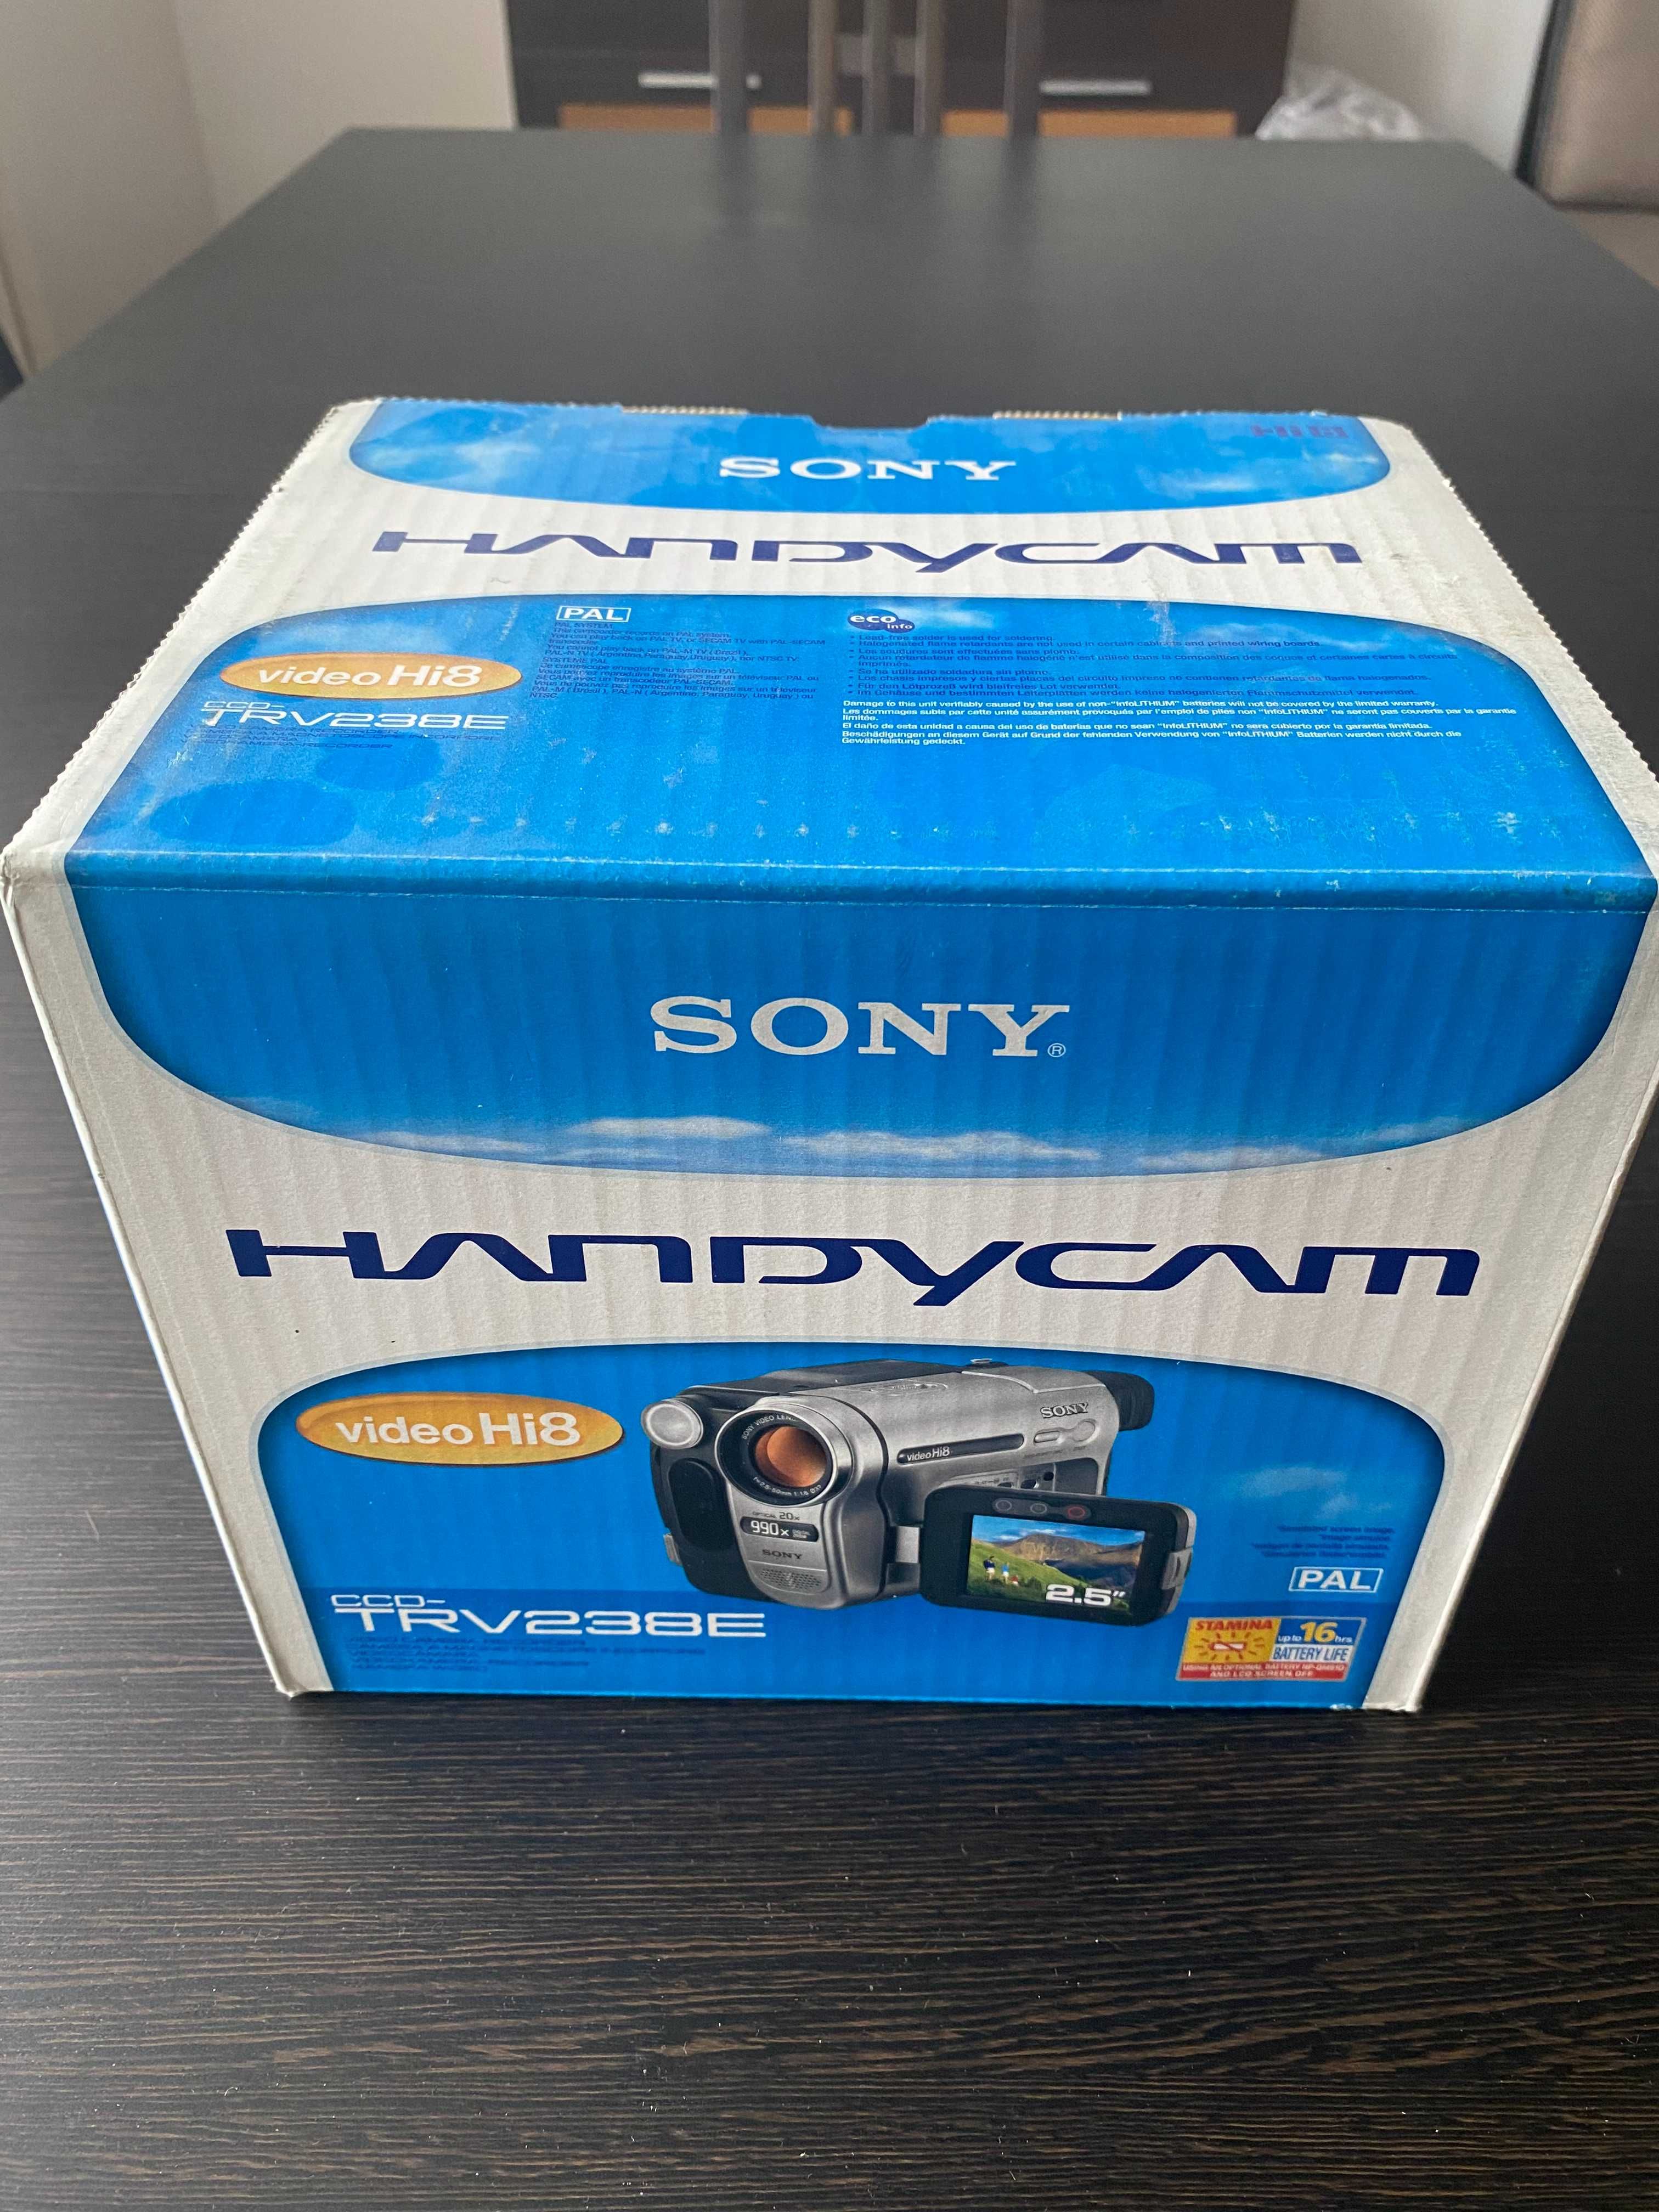 Кинокамера фирмы SONY, «Expand Your-Handycam Horisons»